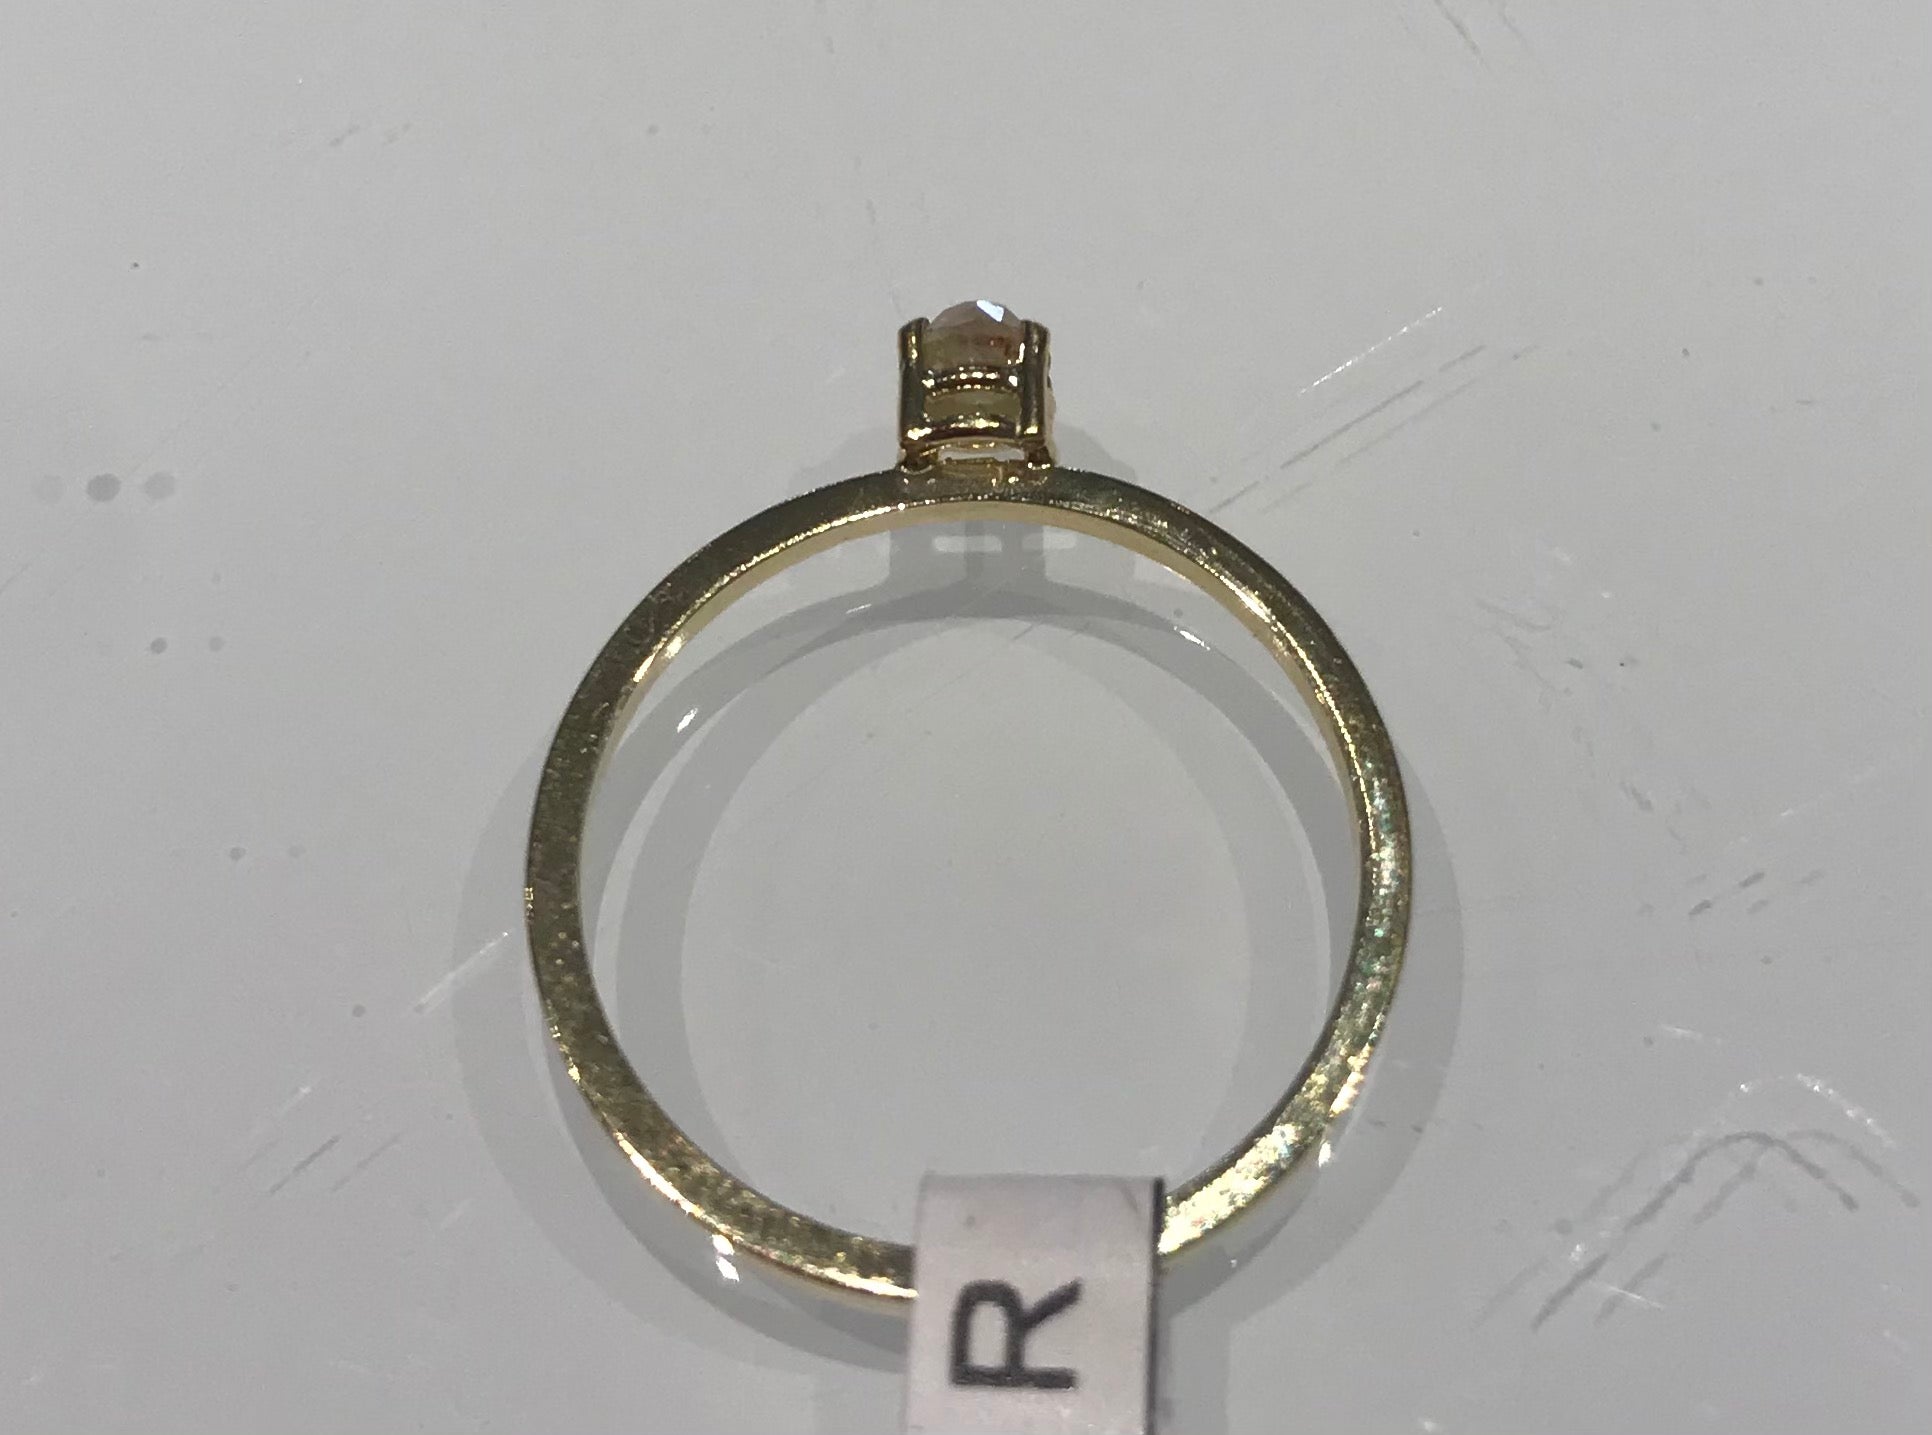 Lore Van Keer UNR R08 golden ring with diamond